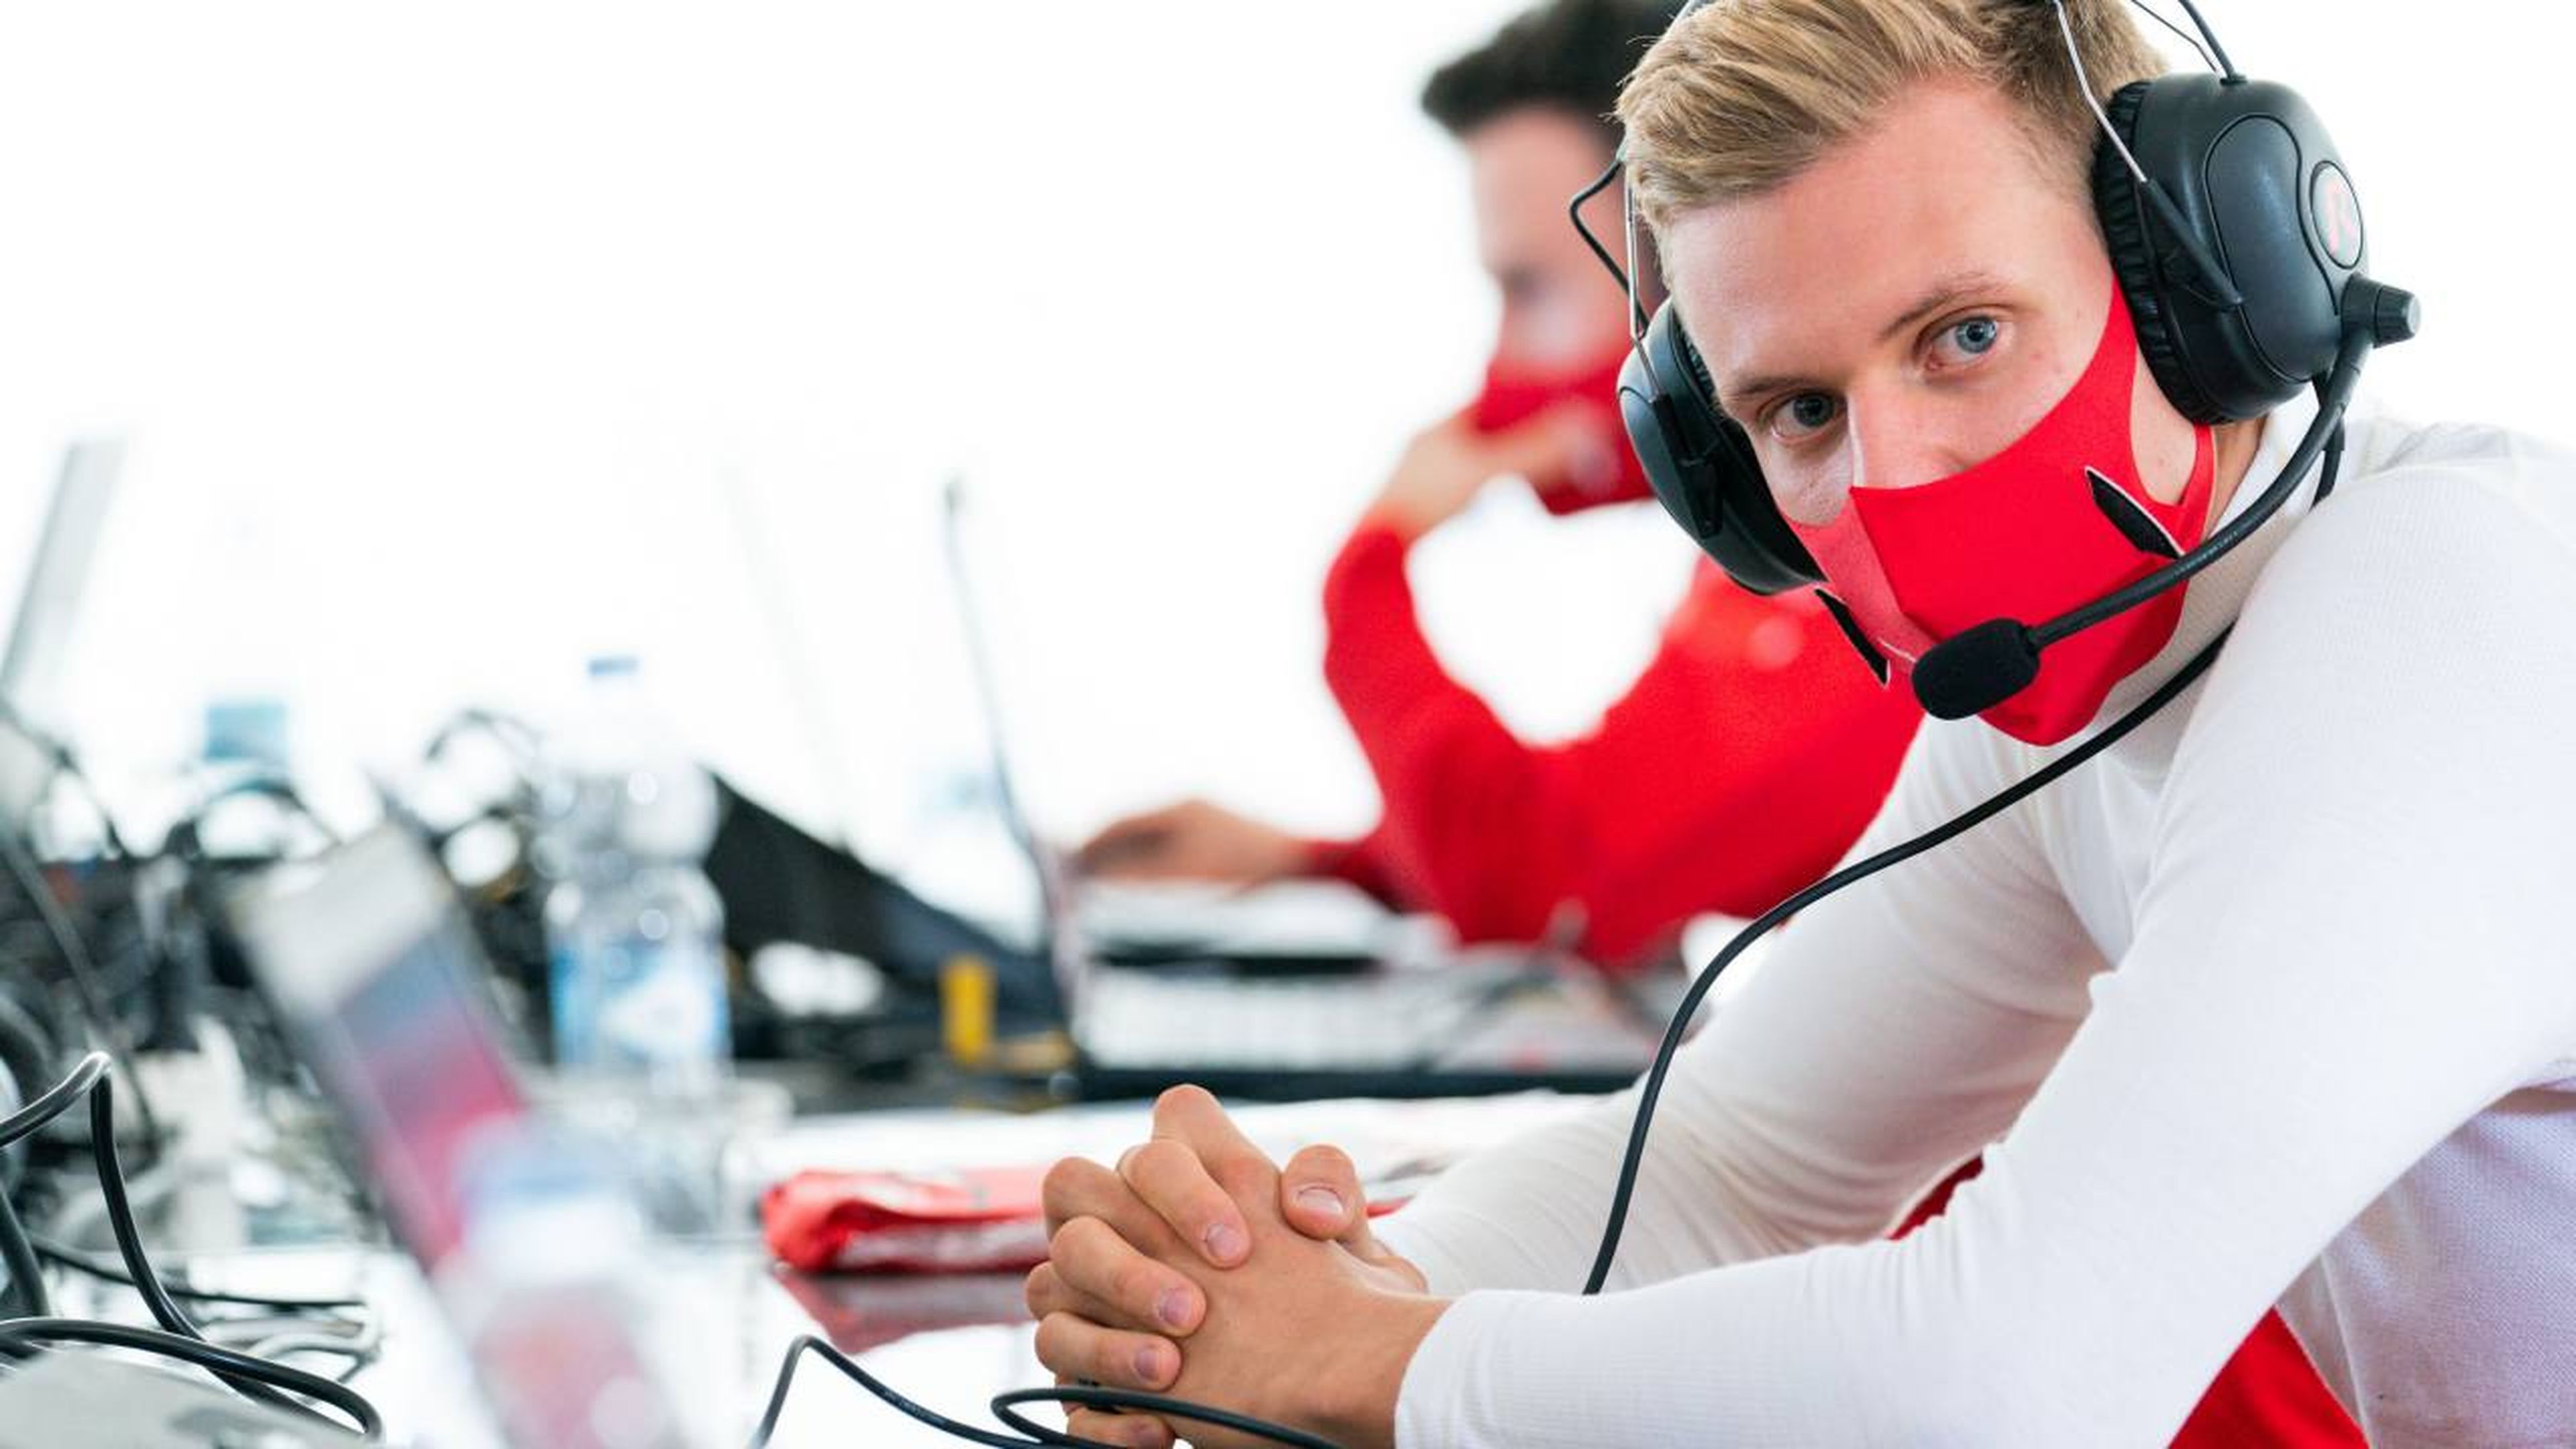 Mick Schumacher durante los test con un Ferrari de 2018 en Fiorano